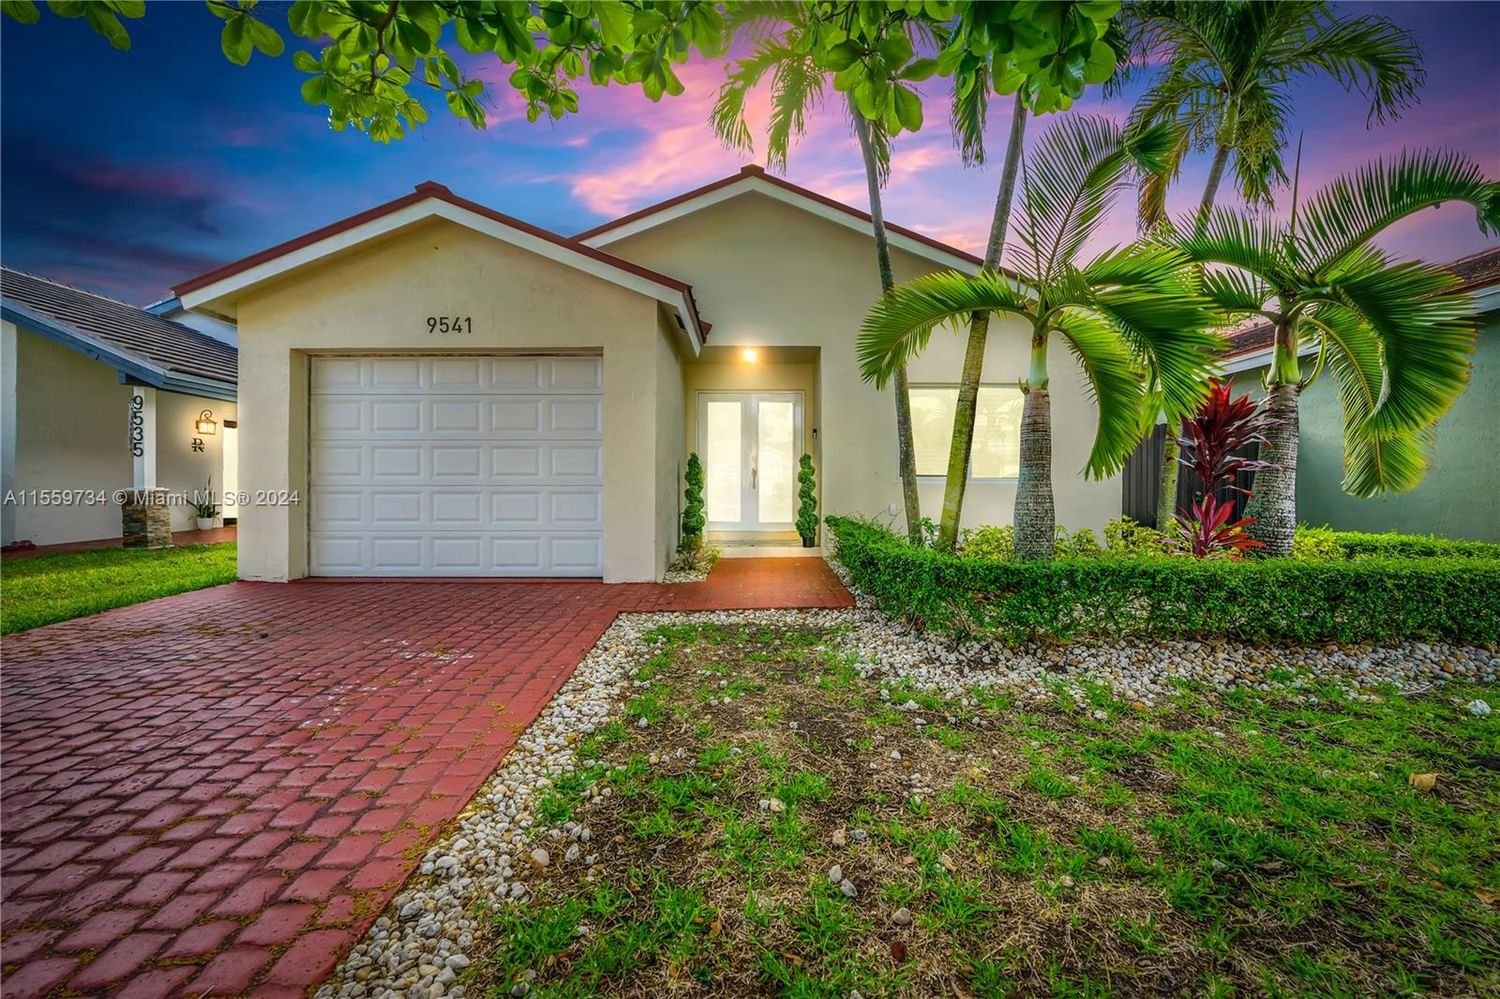 Real estate property located at 9541 148th Pl, Miami-Dade County, HAMMOCKS SEC 2, Miami, FL